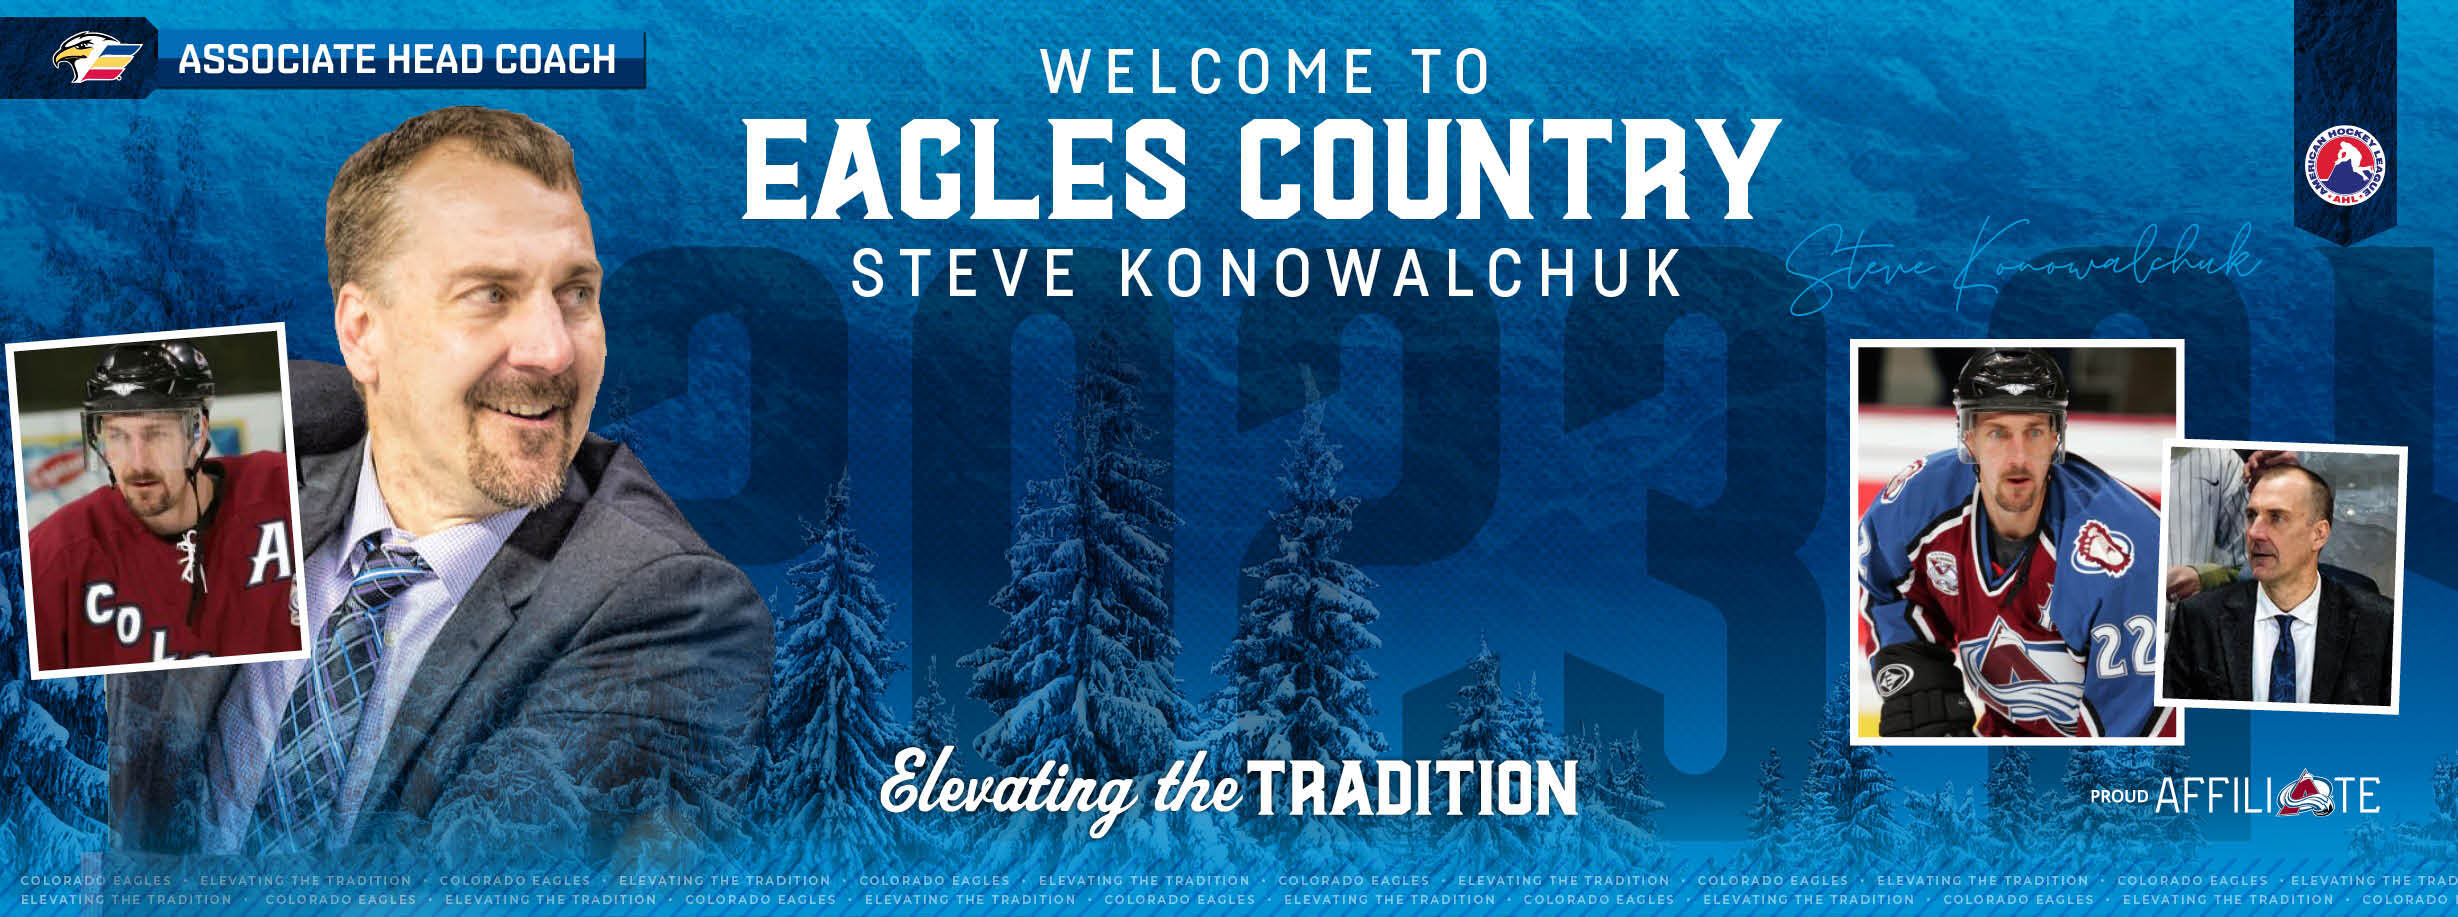 Steve Konowalchuk Named Colorado Eagles Associate Head Coach